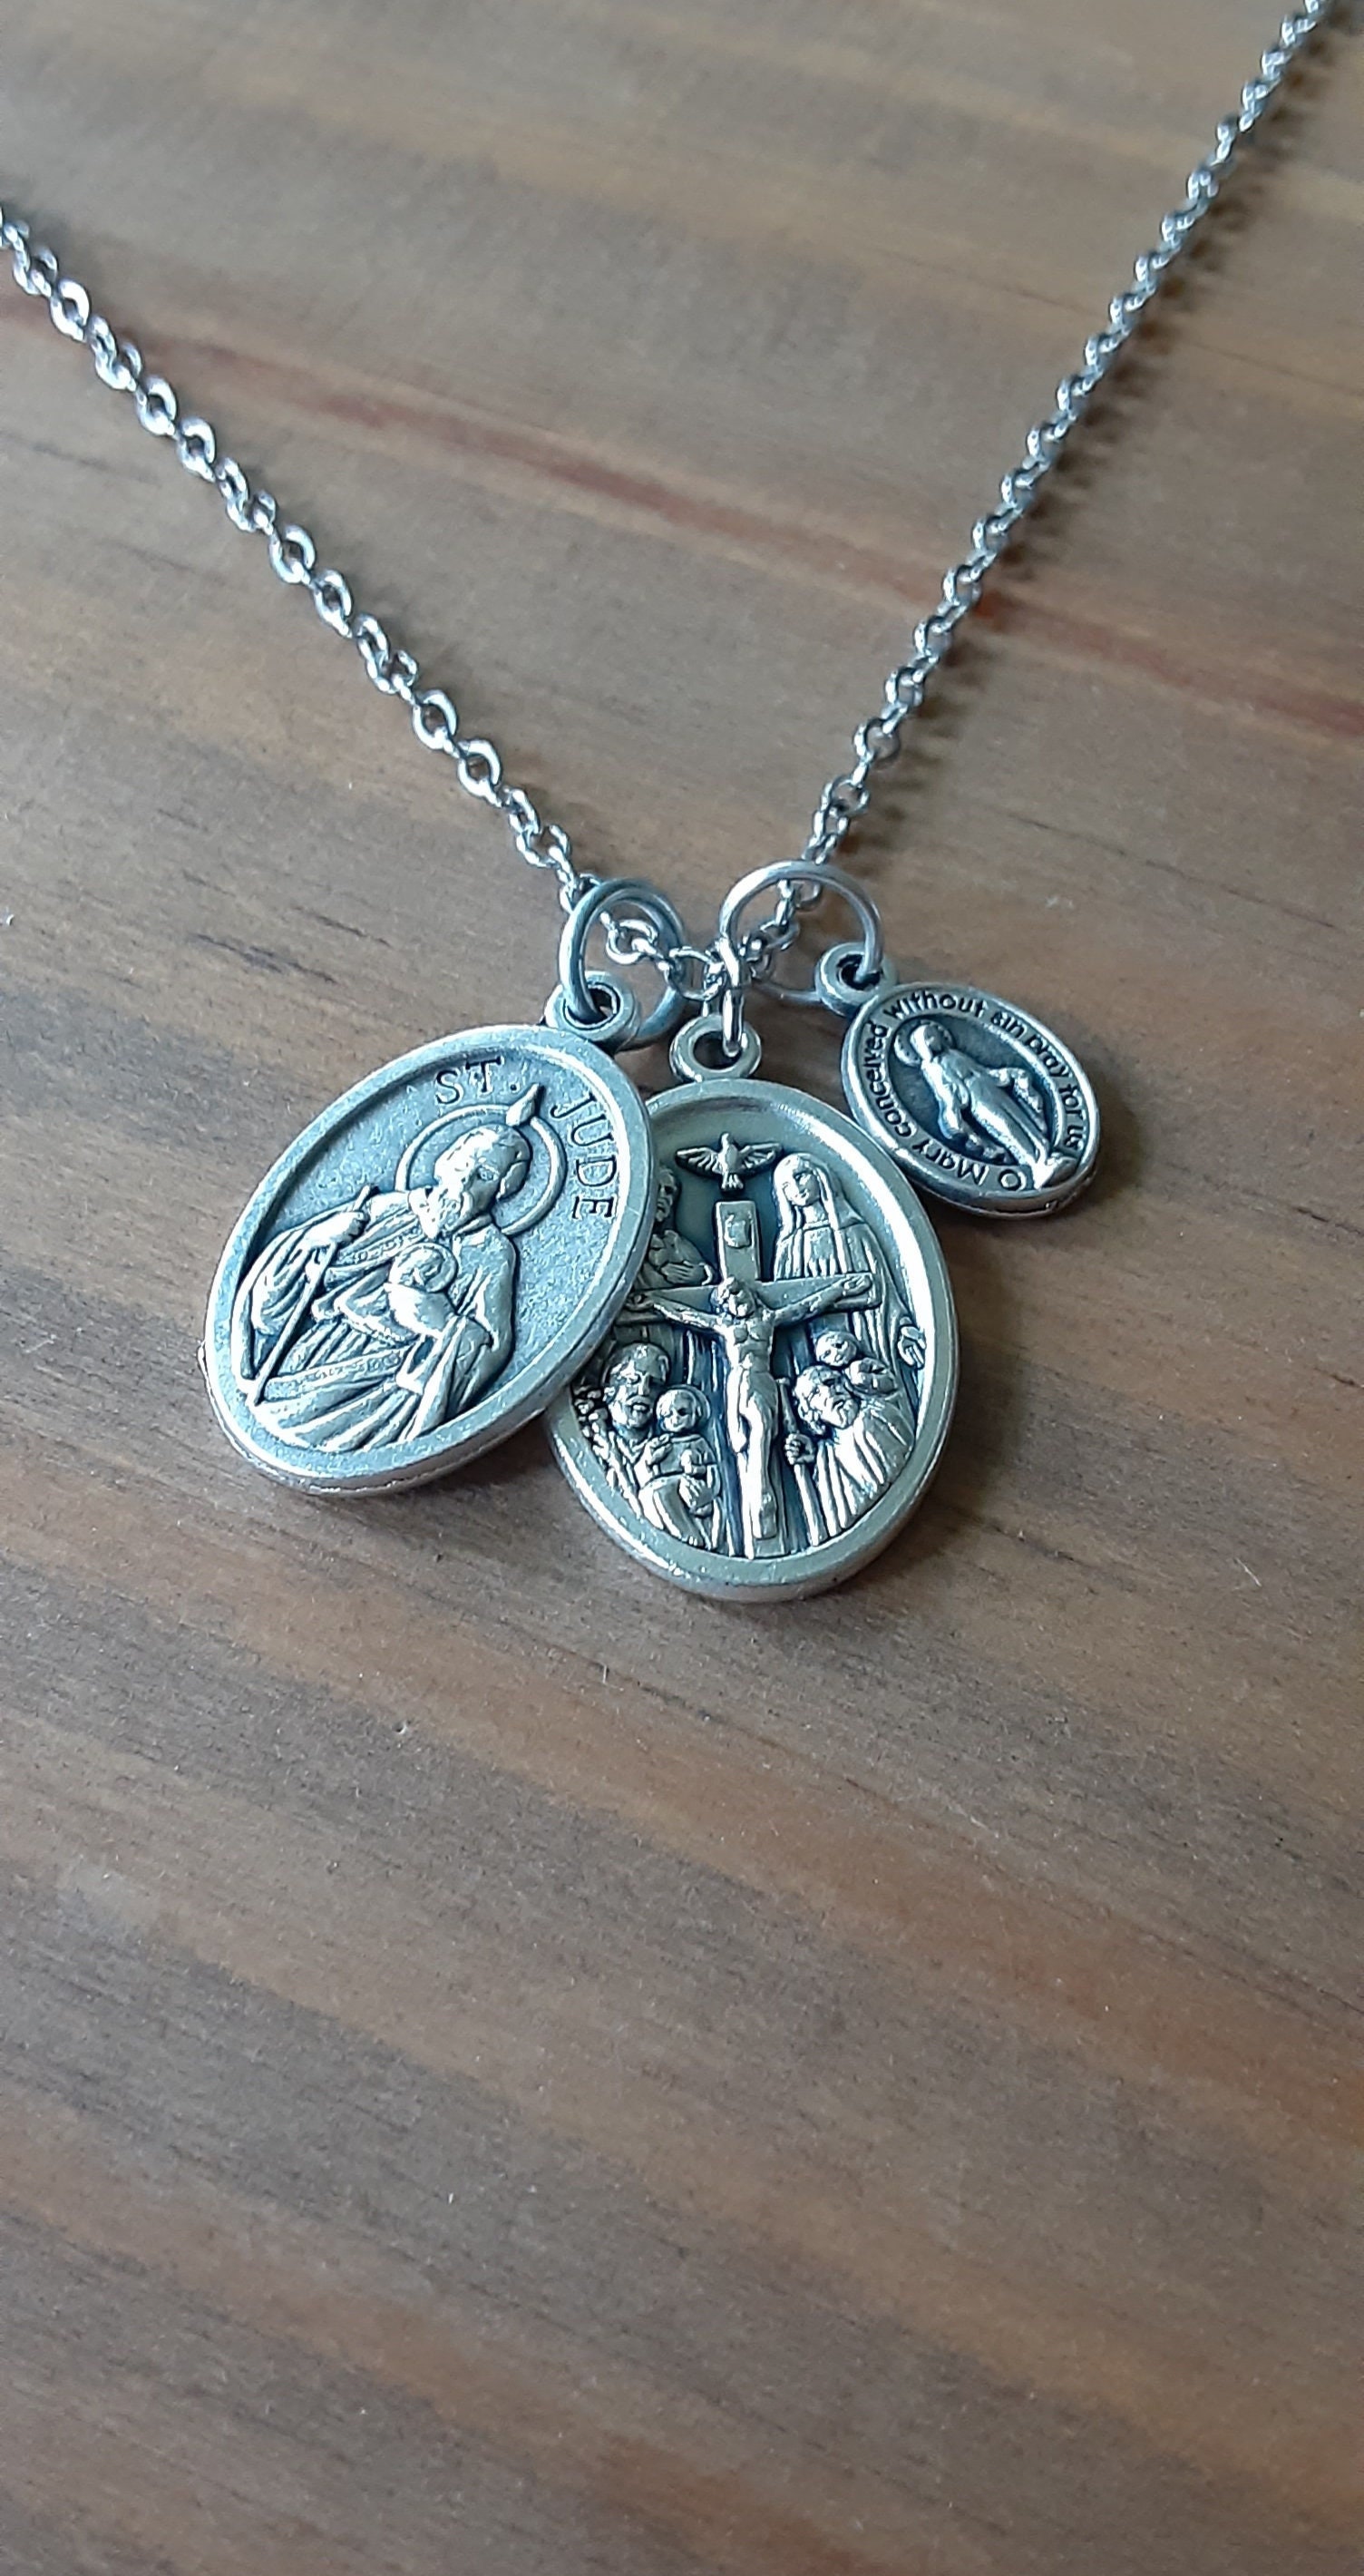 [NEW] Judas Priest Silver Color British Steel Necklace and Razor Blade  Pendant